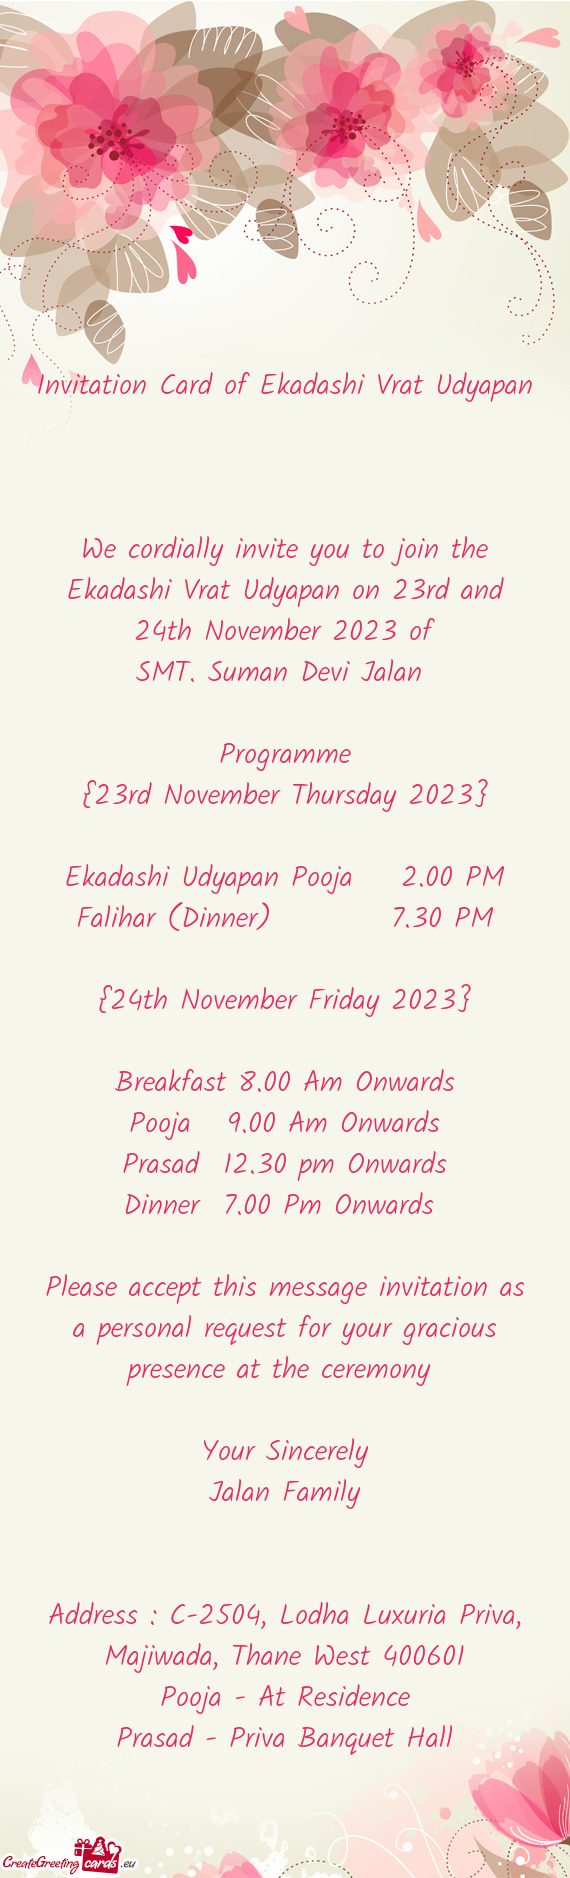 We cordially invite you to join the Ekadashi Vrat Udyapan on 23rd and 24th November 2023 of